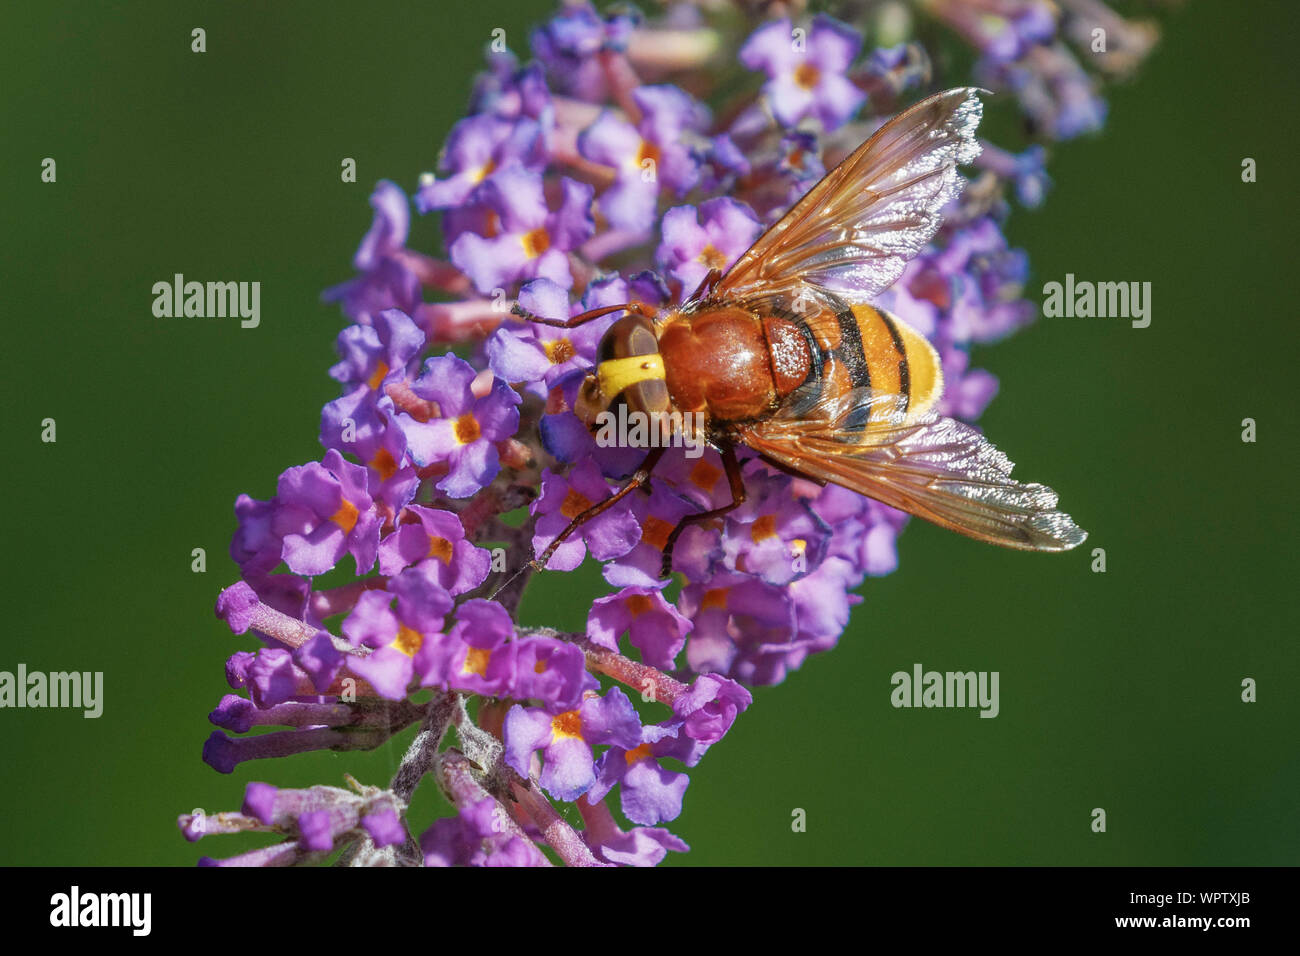 hornet mimic hoverfly feeding on buddleia flowers Stock Photo